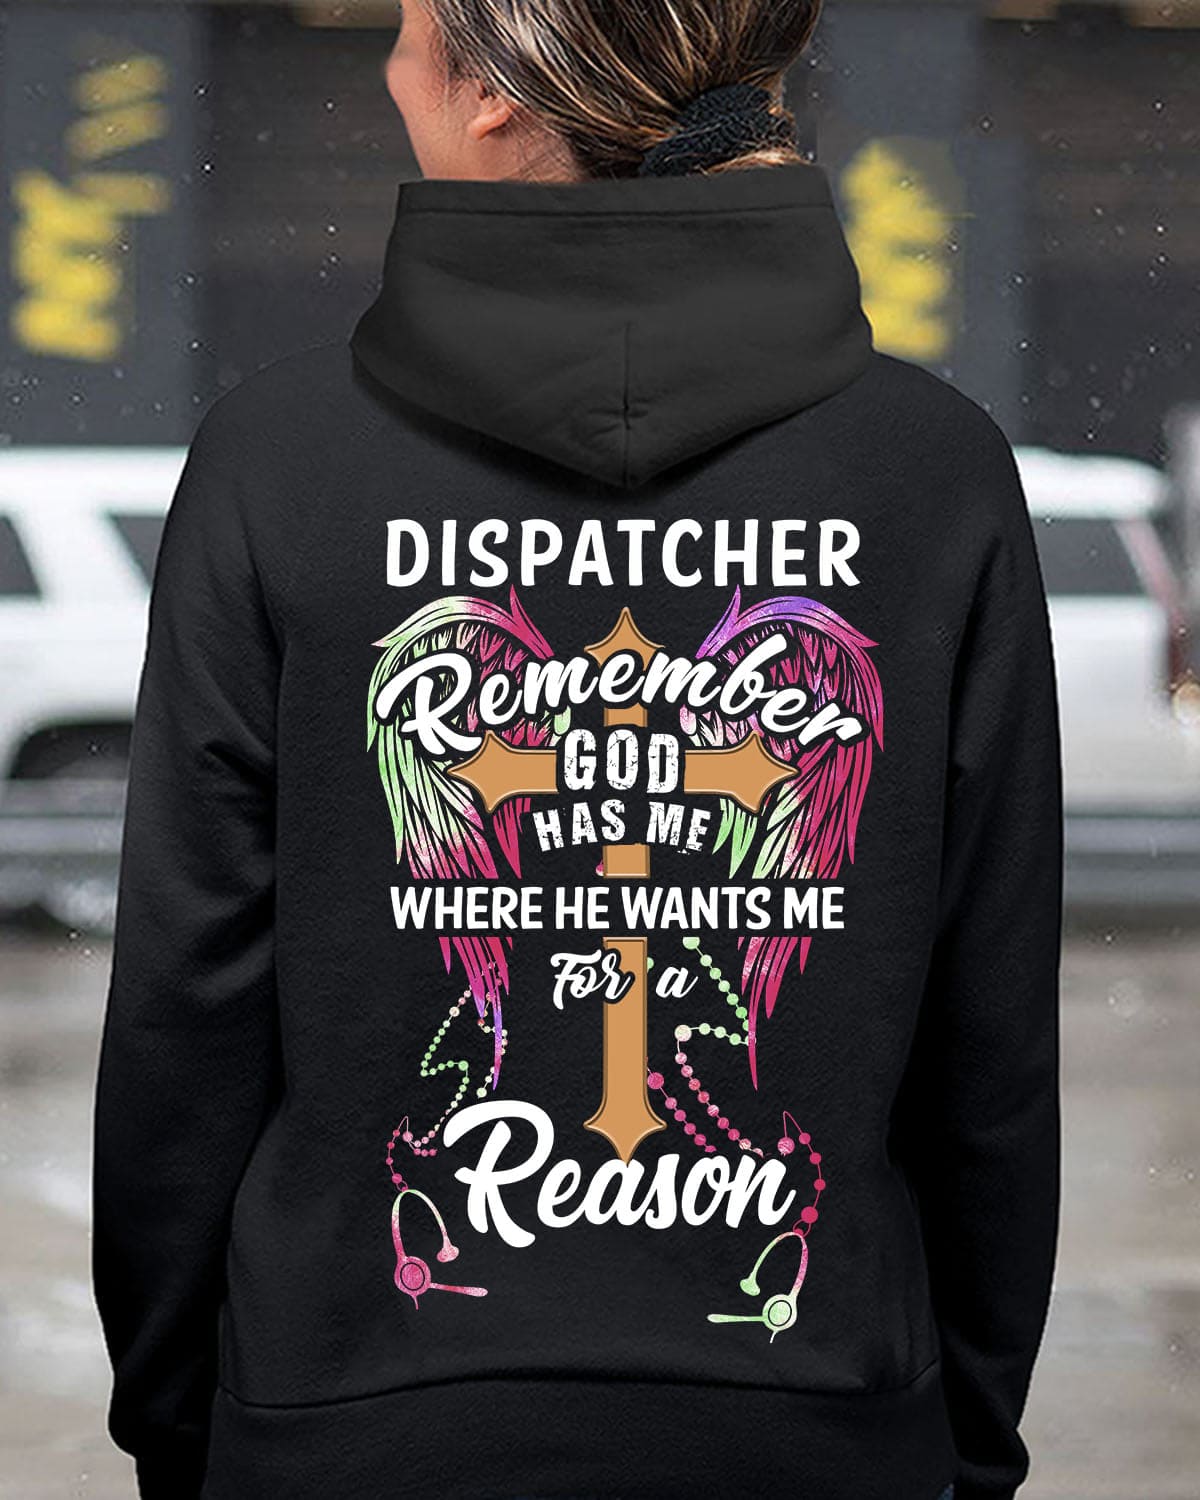 Dispacher God's Cross - Dispatcher remember god has me where he wants me for a reason